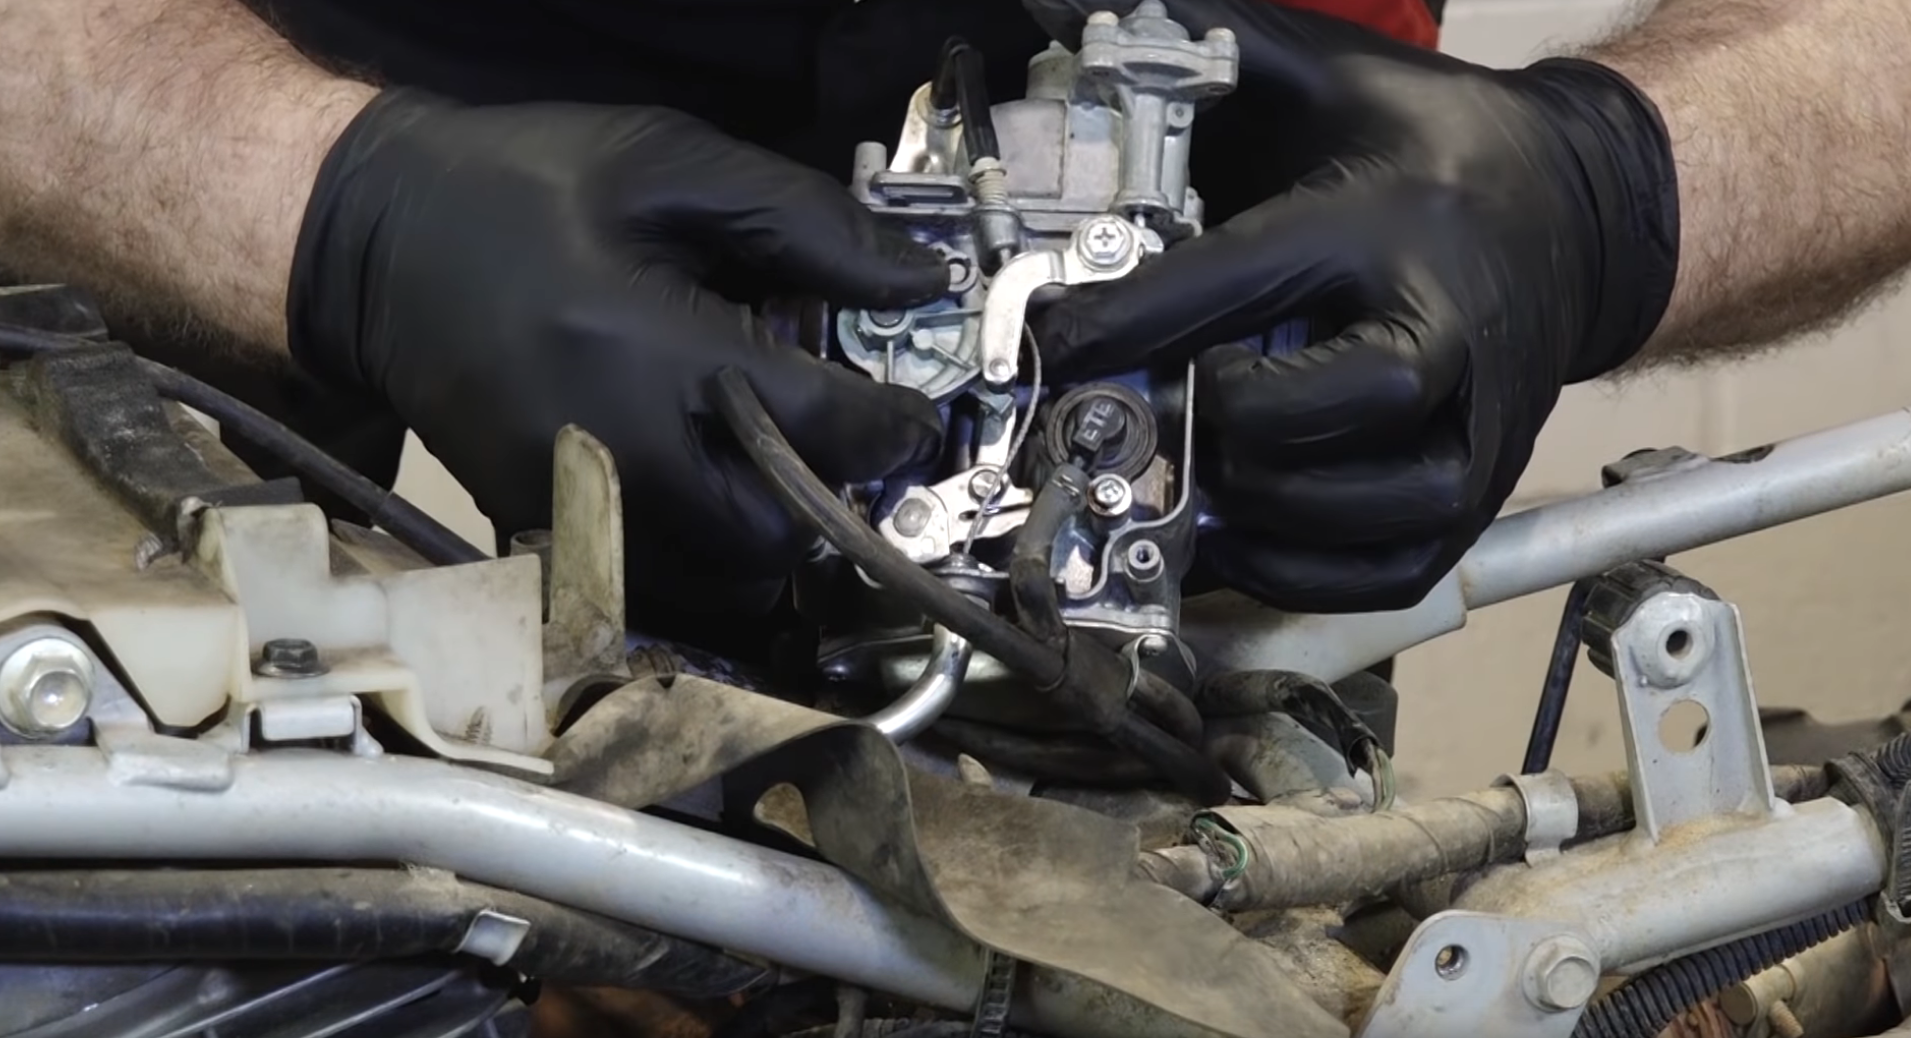 Honda TRX 400 ATV carb cleaning and rebuild